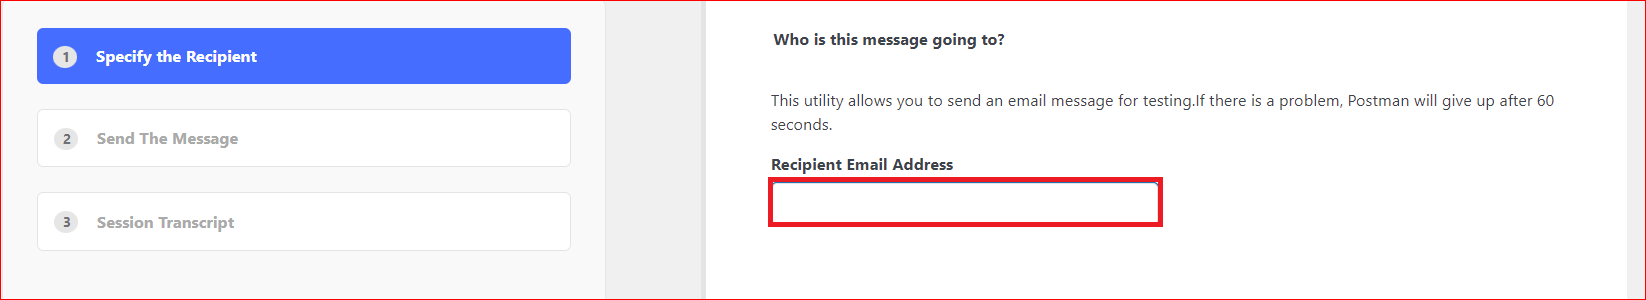 Recipient email Address field